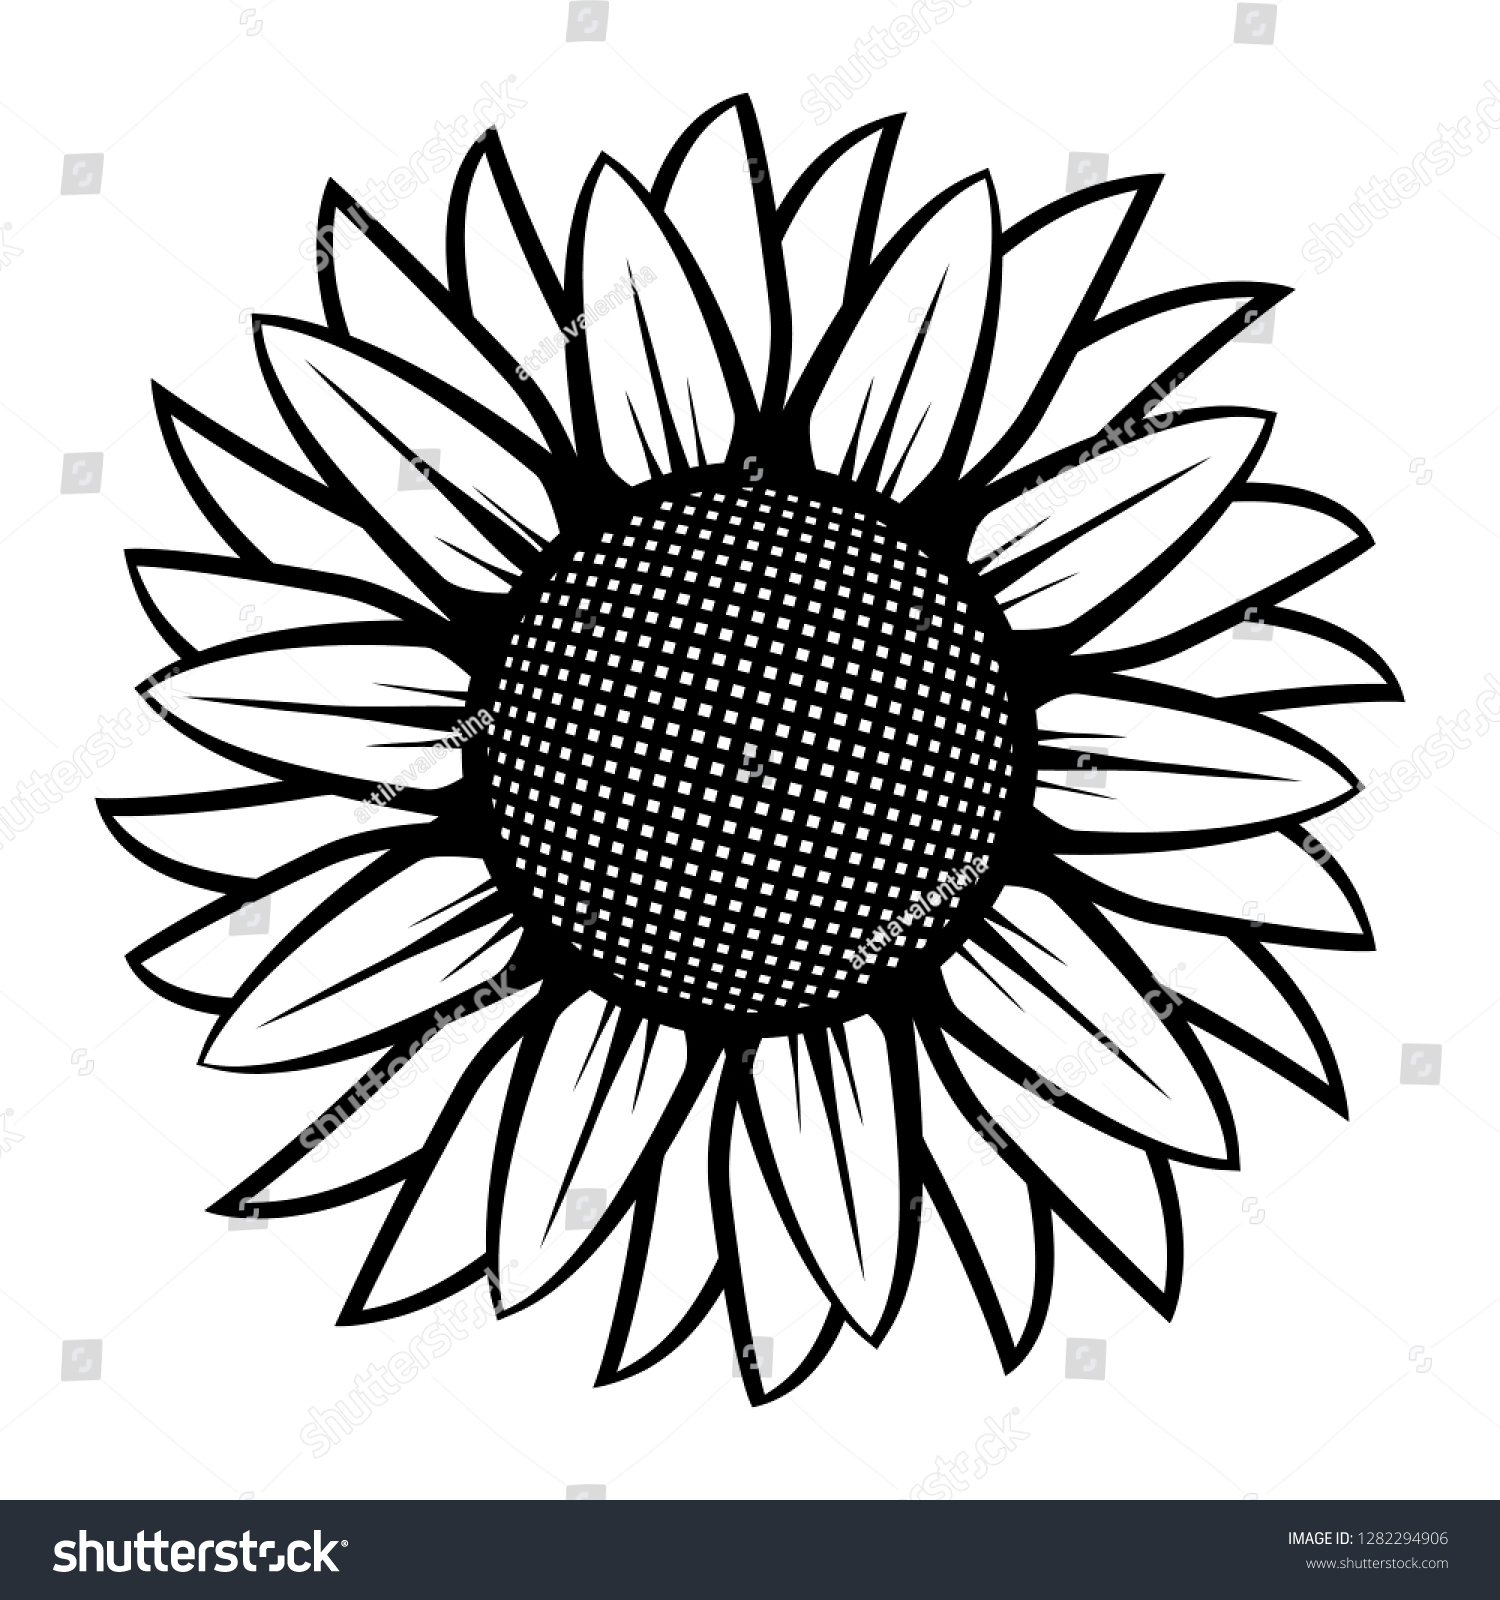 Sunflower Illustration Black White On Isolated Stock Vector (Royalty Free) ...